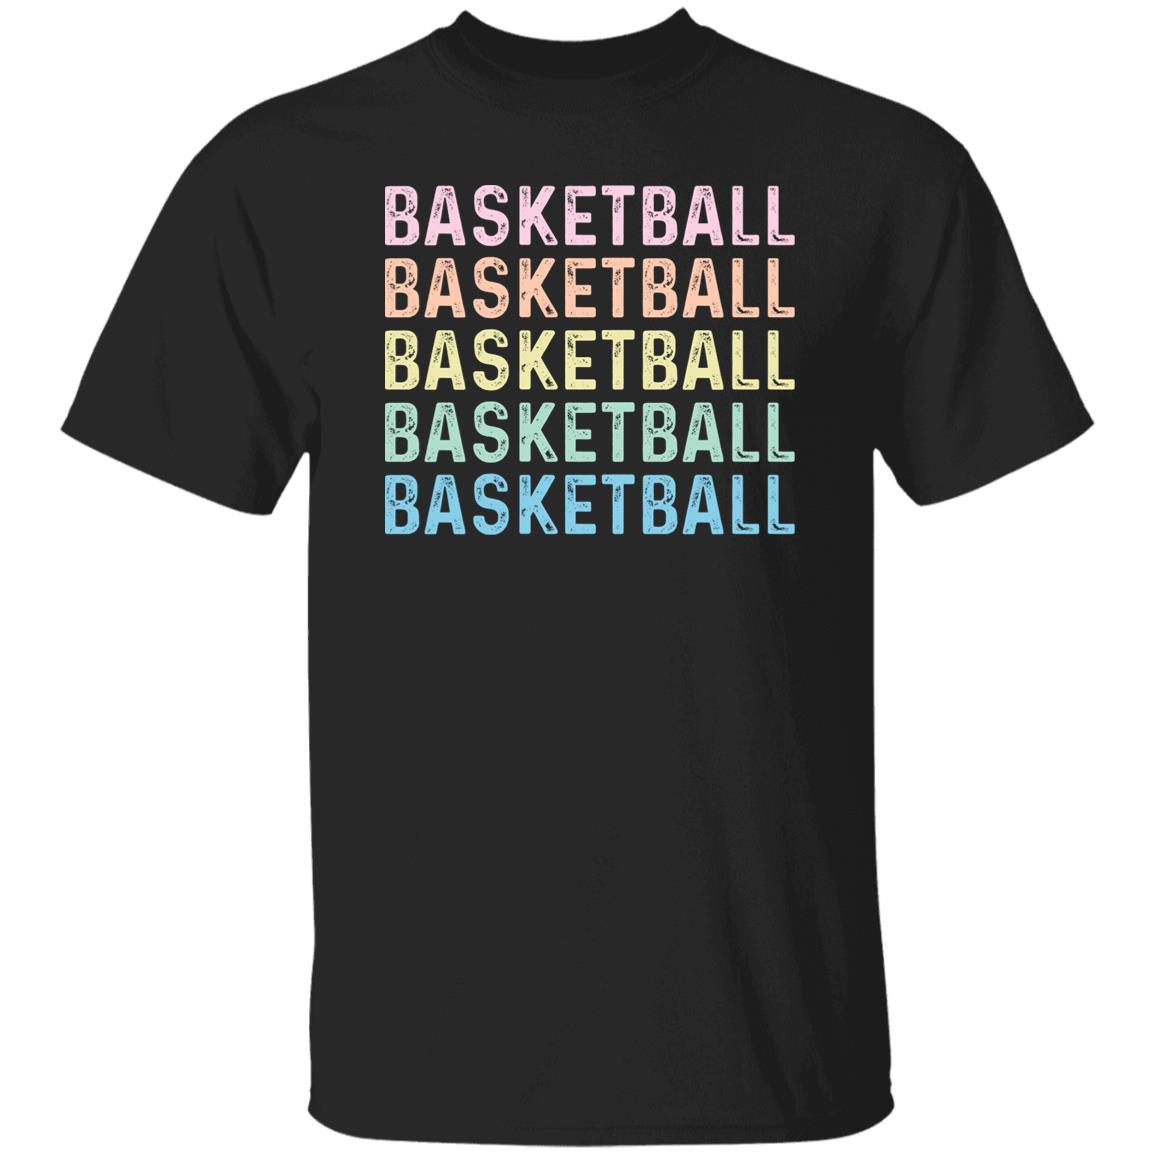 Basketball Unisex Shirt, Basketball Player tee Black S-2XL-Black-Family-Gift-Planet